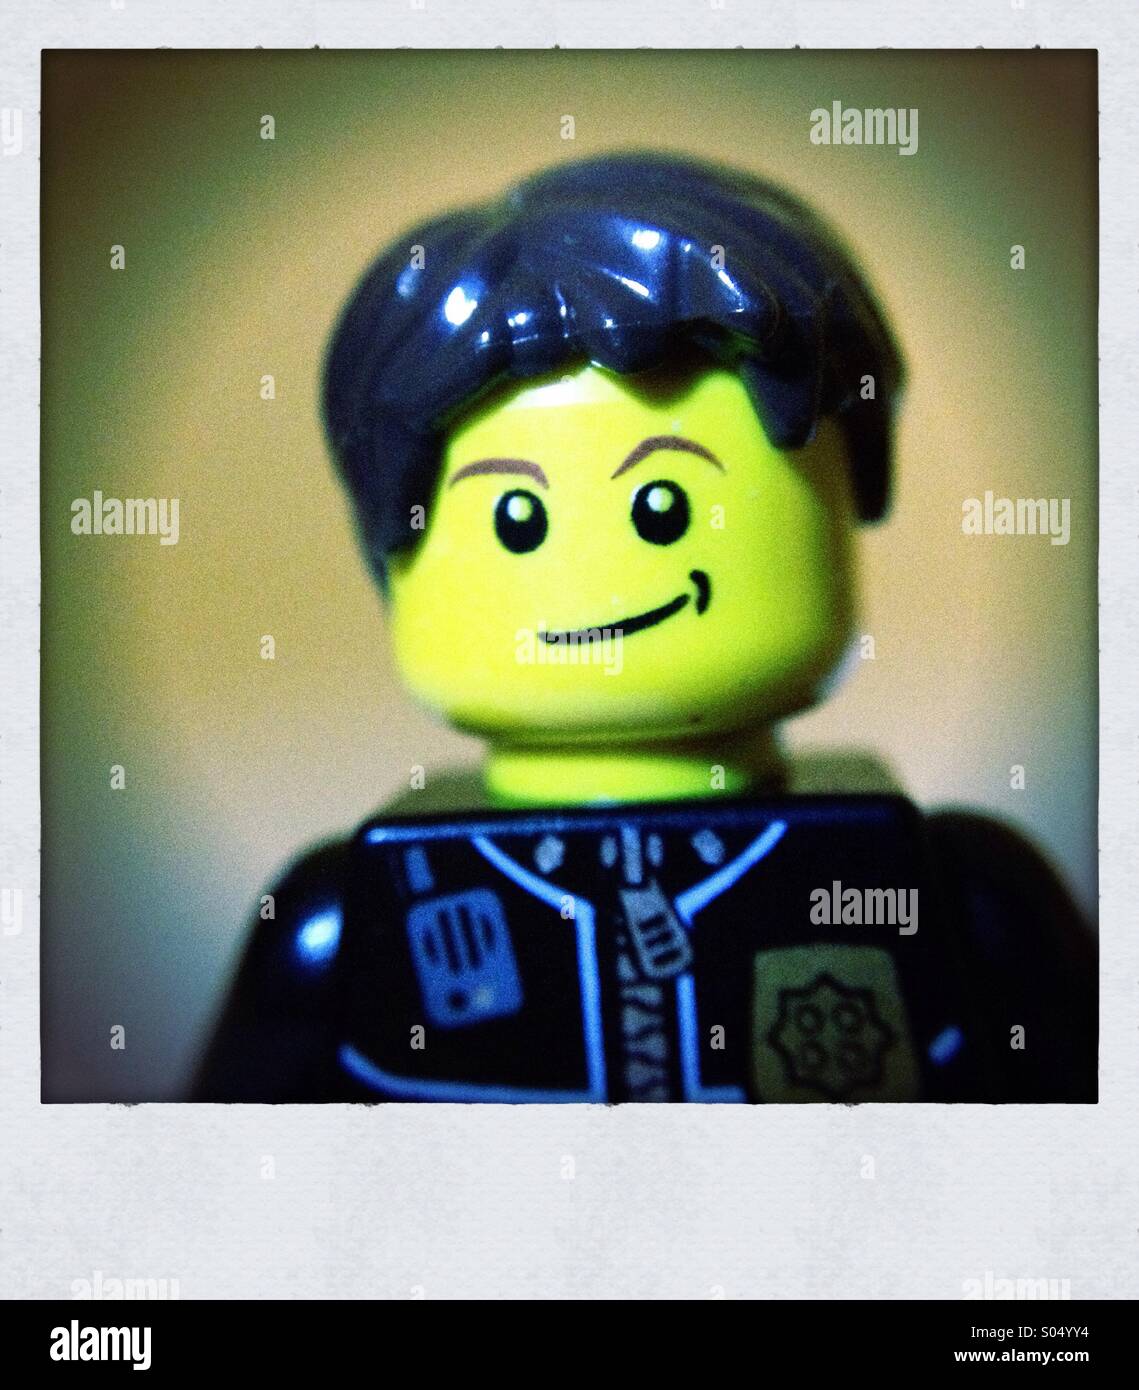 Lego figure portrait, male, black hair, smiling Stock Photo - Alamy